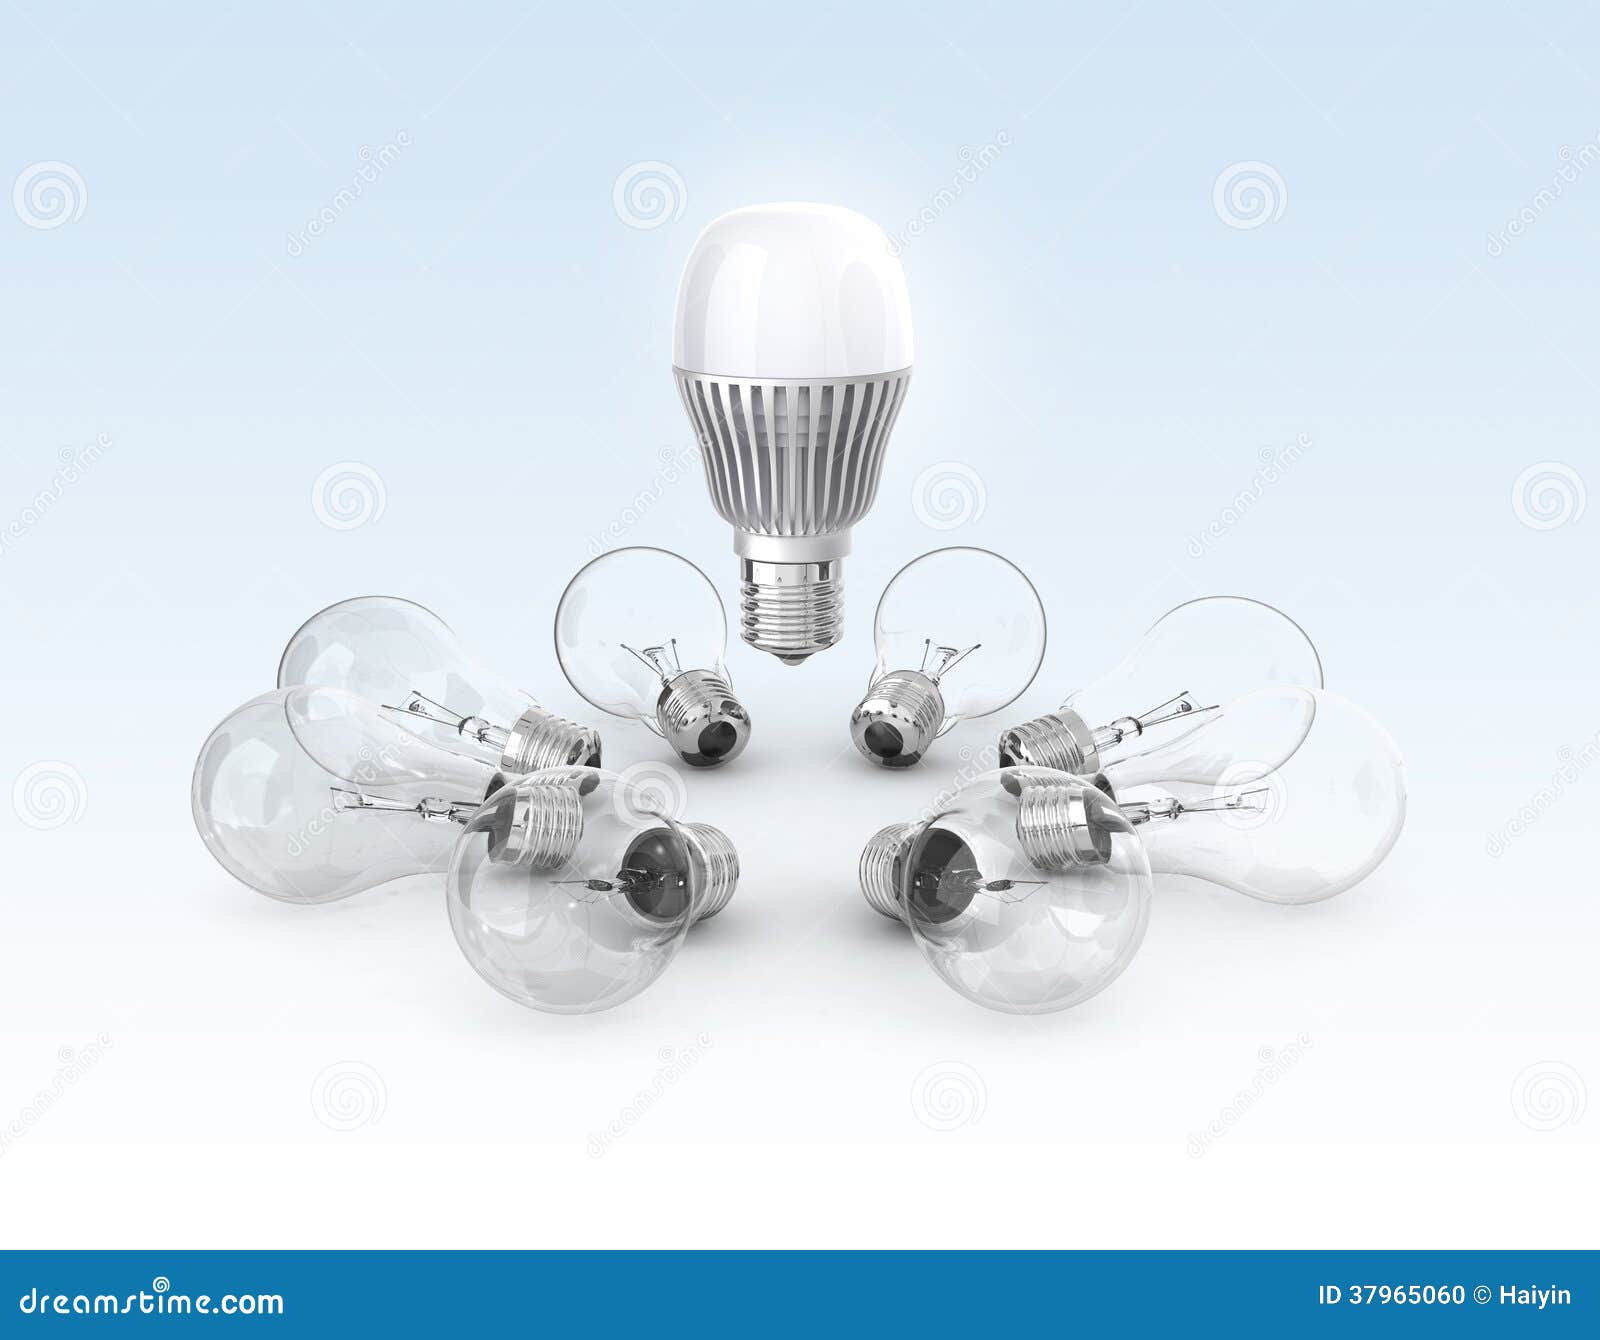 led and filaments light bulbs